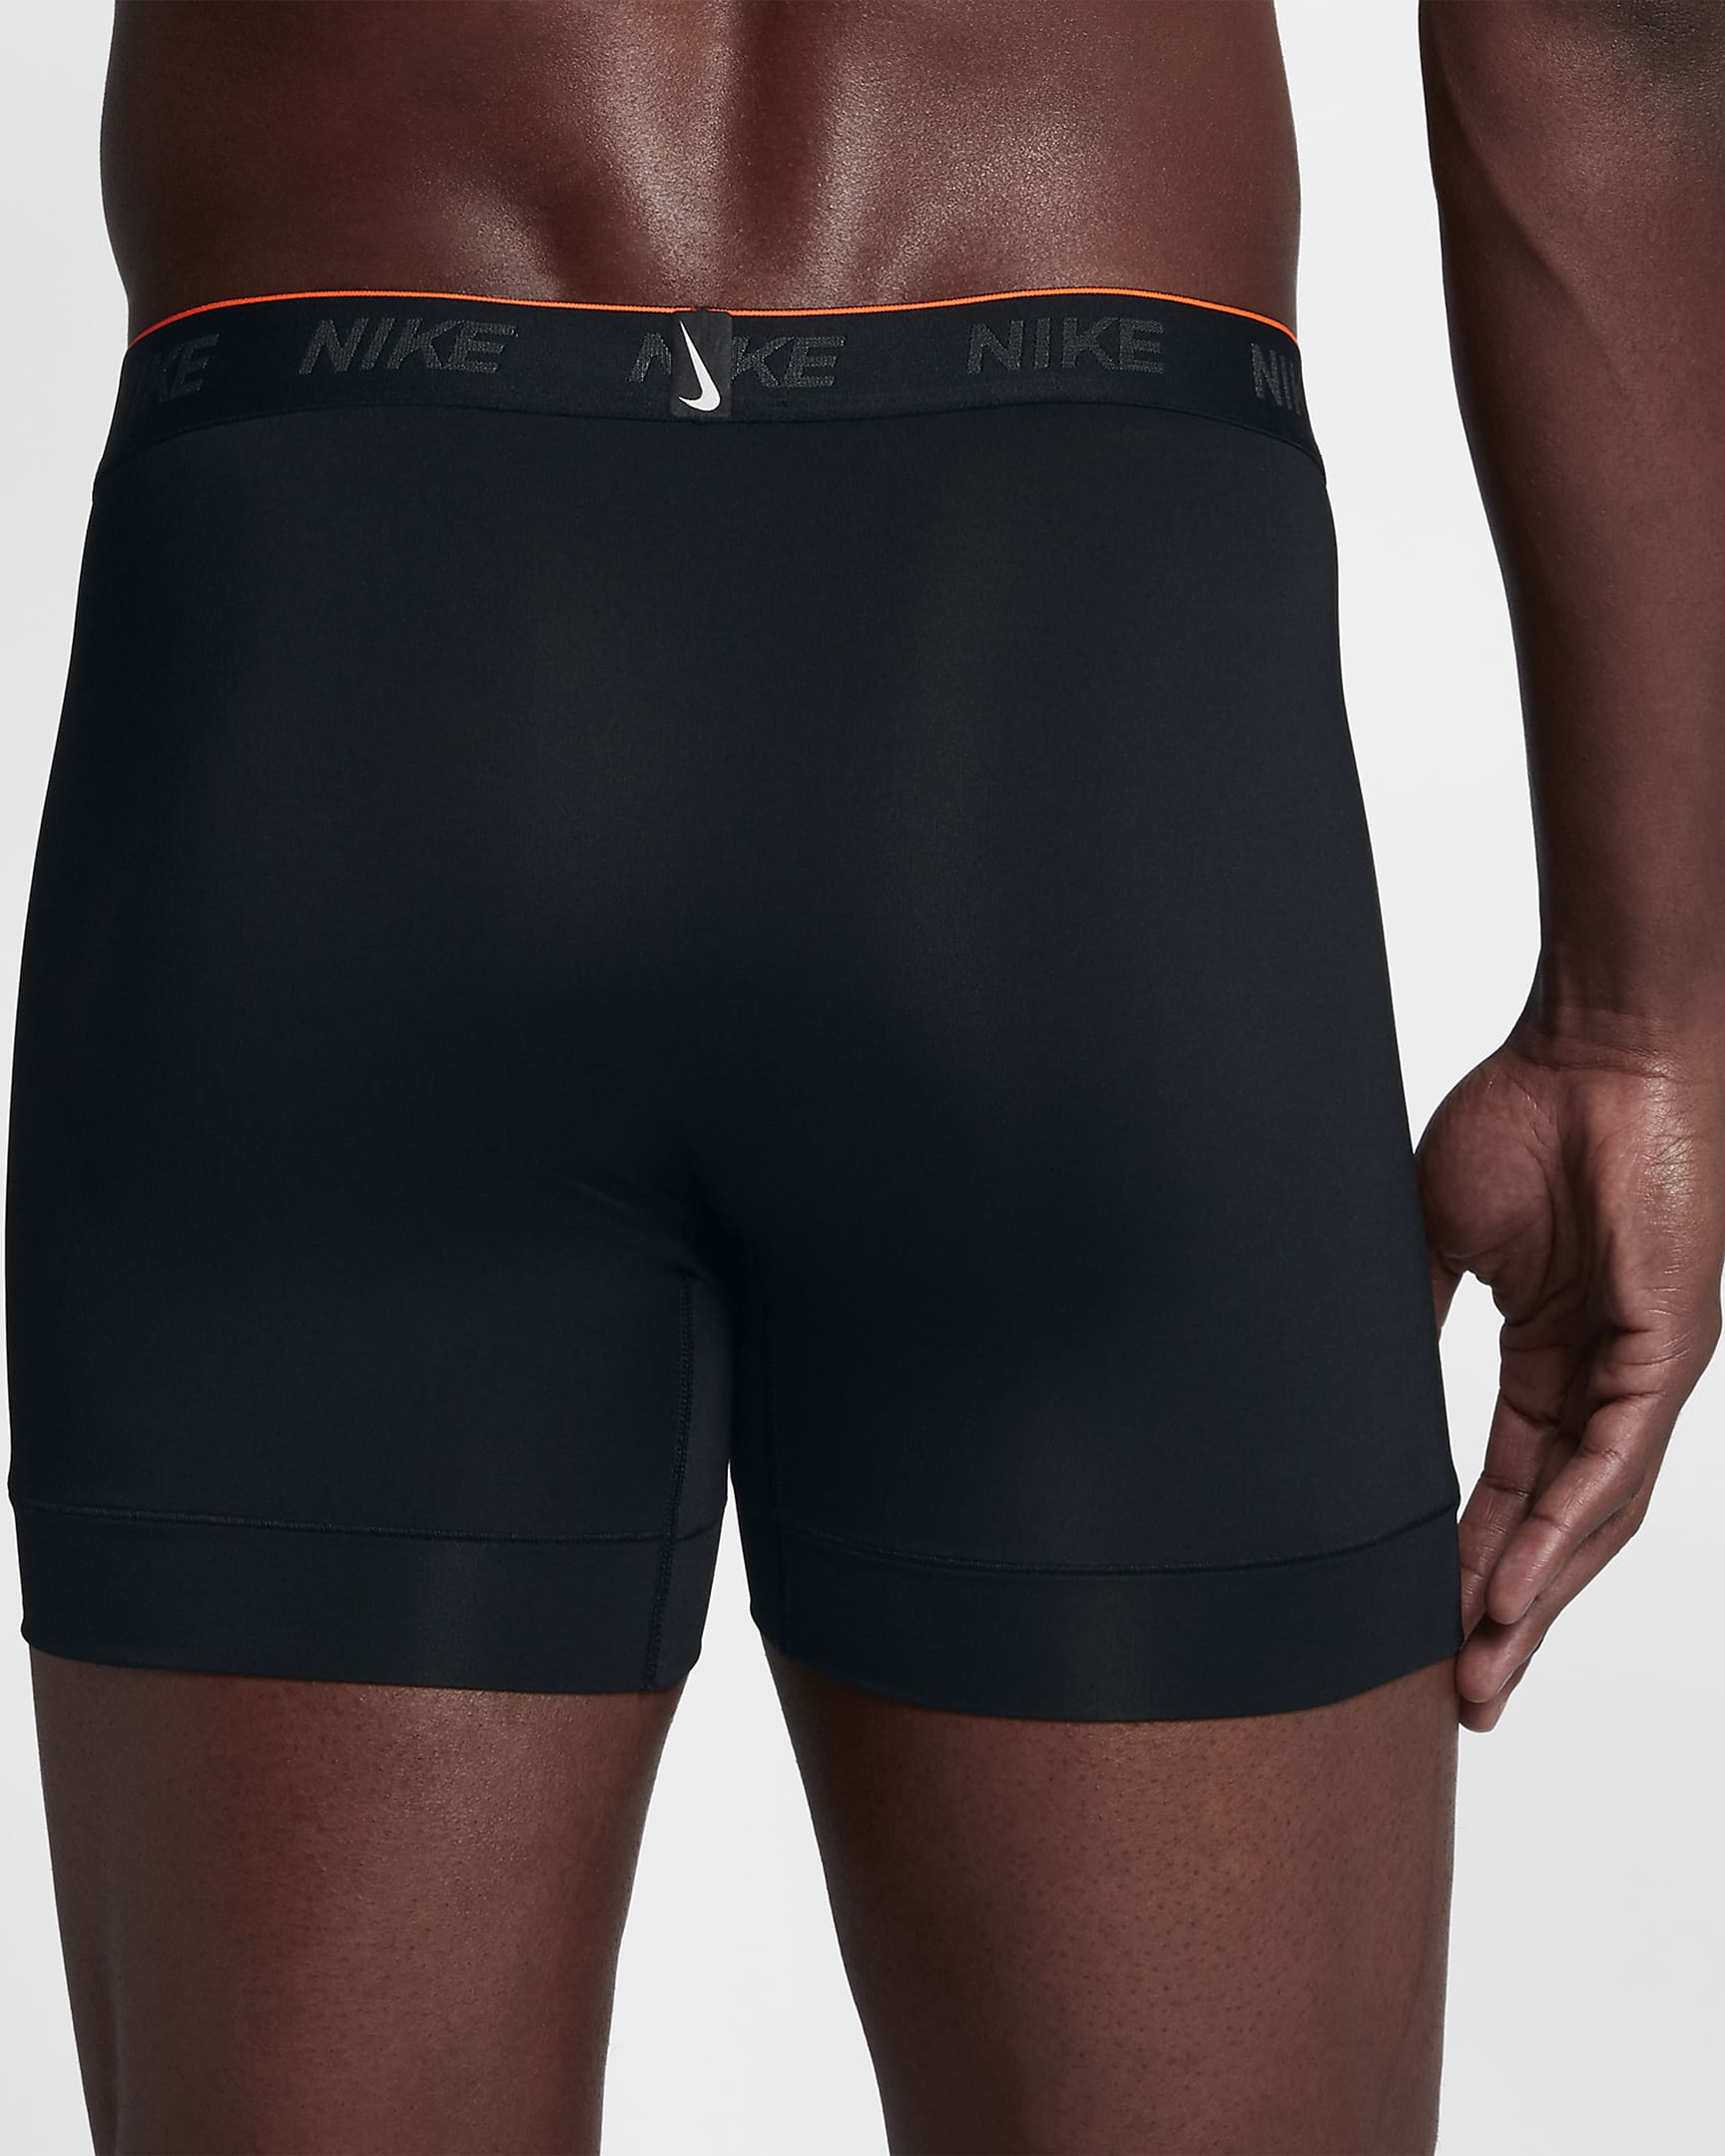 Nike Men's Underwear (2 Pairs) - Black/Black/White